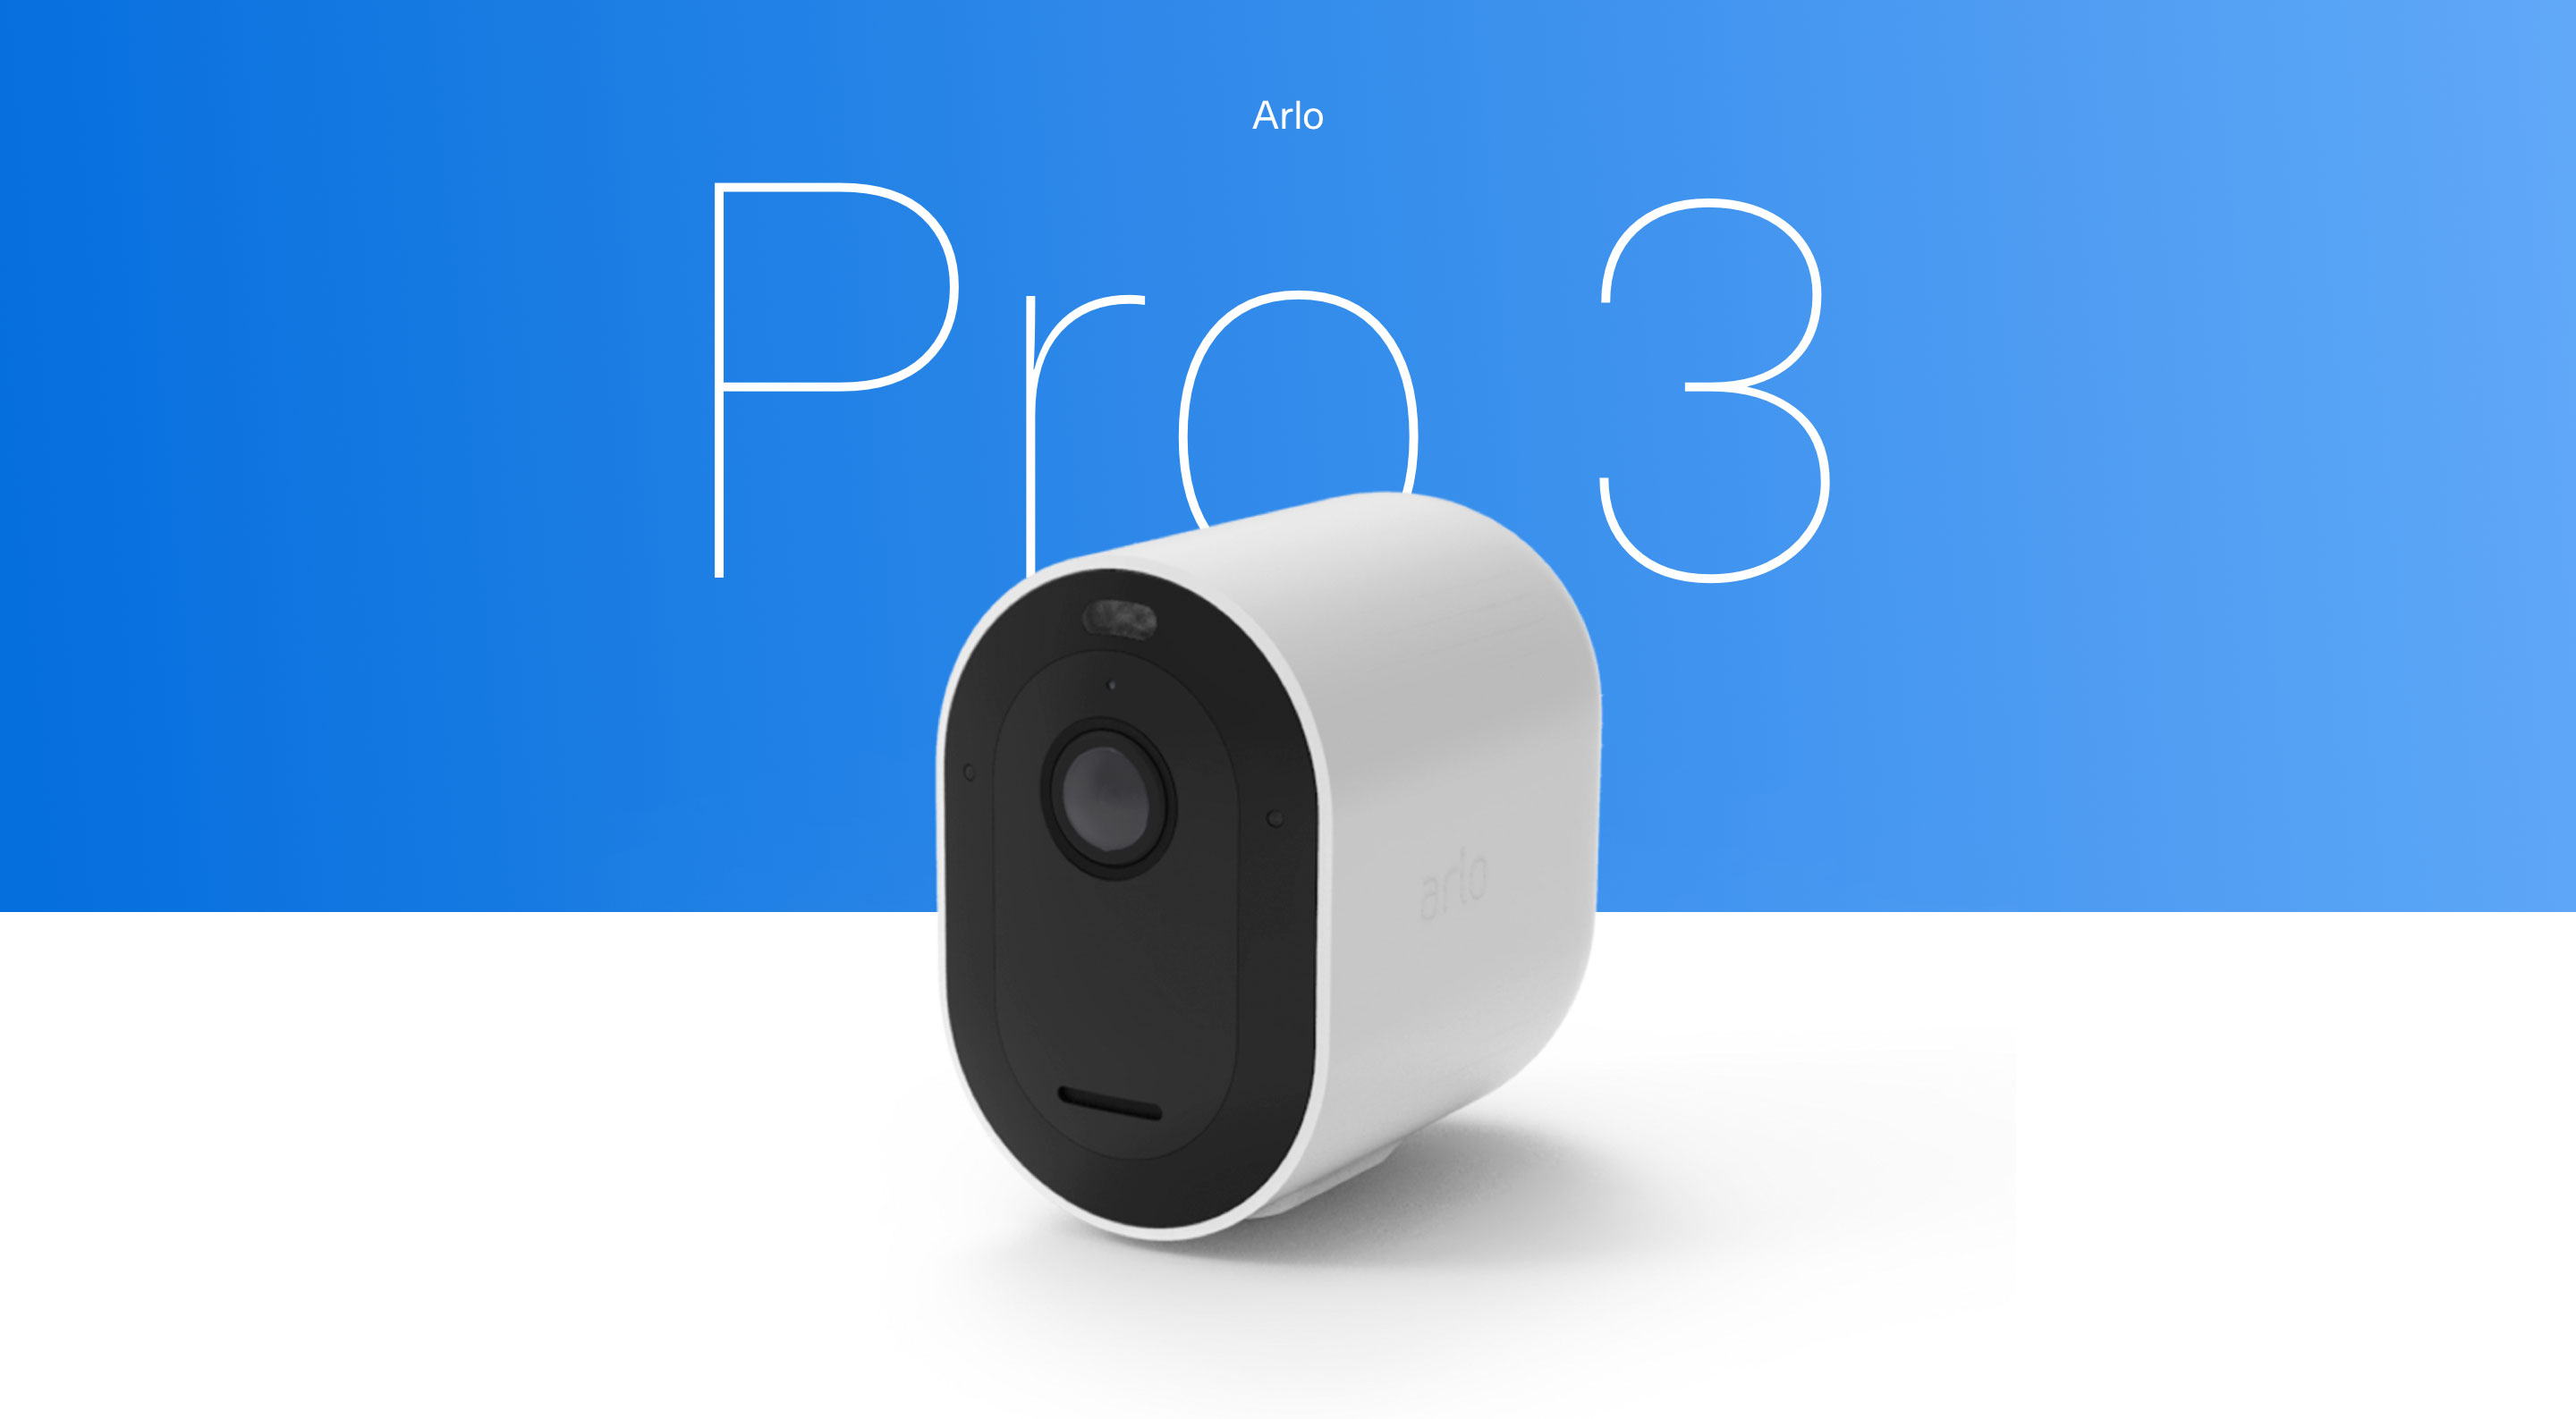 Product Image: Arlo Pro 3 wireless surveillance camera.